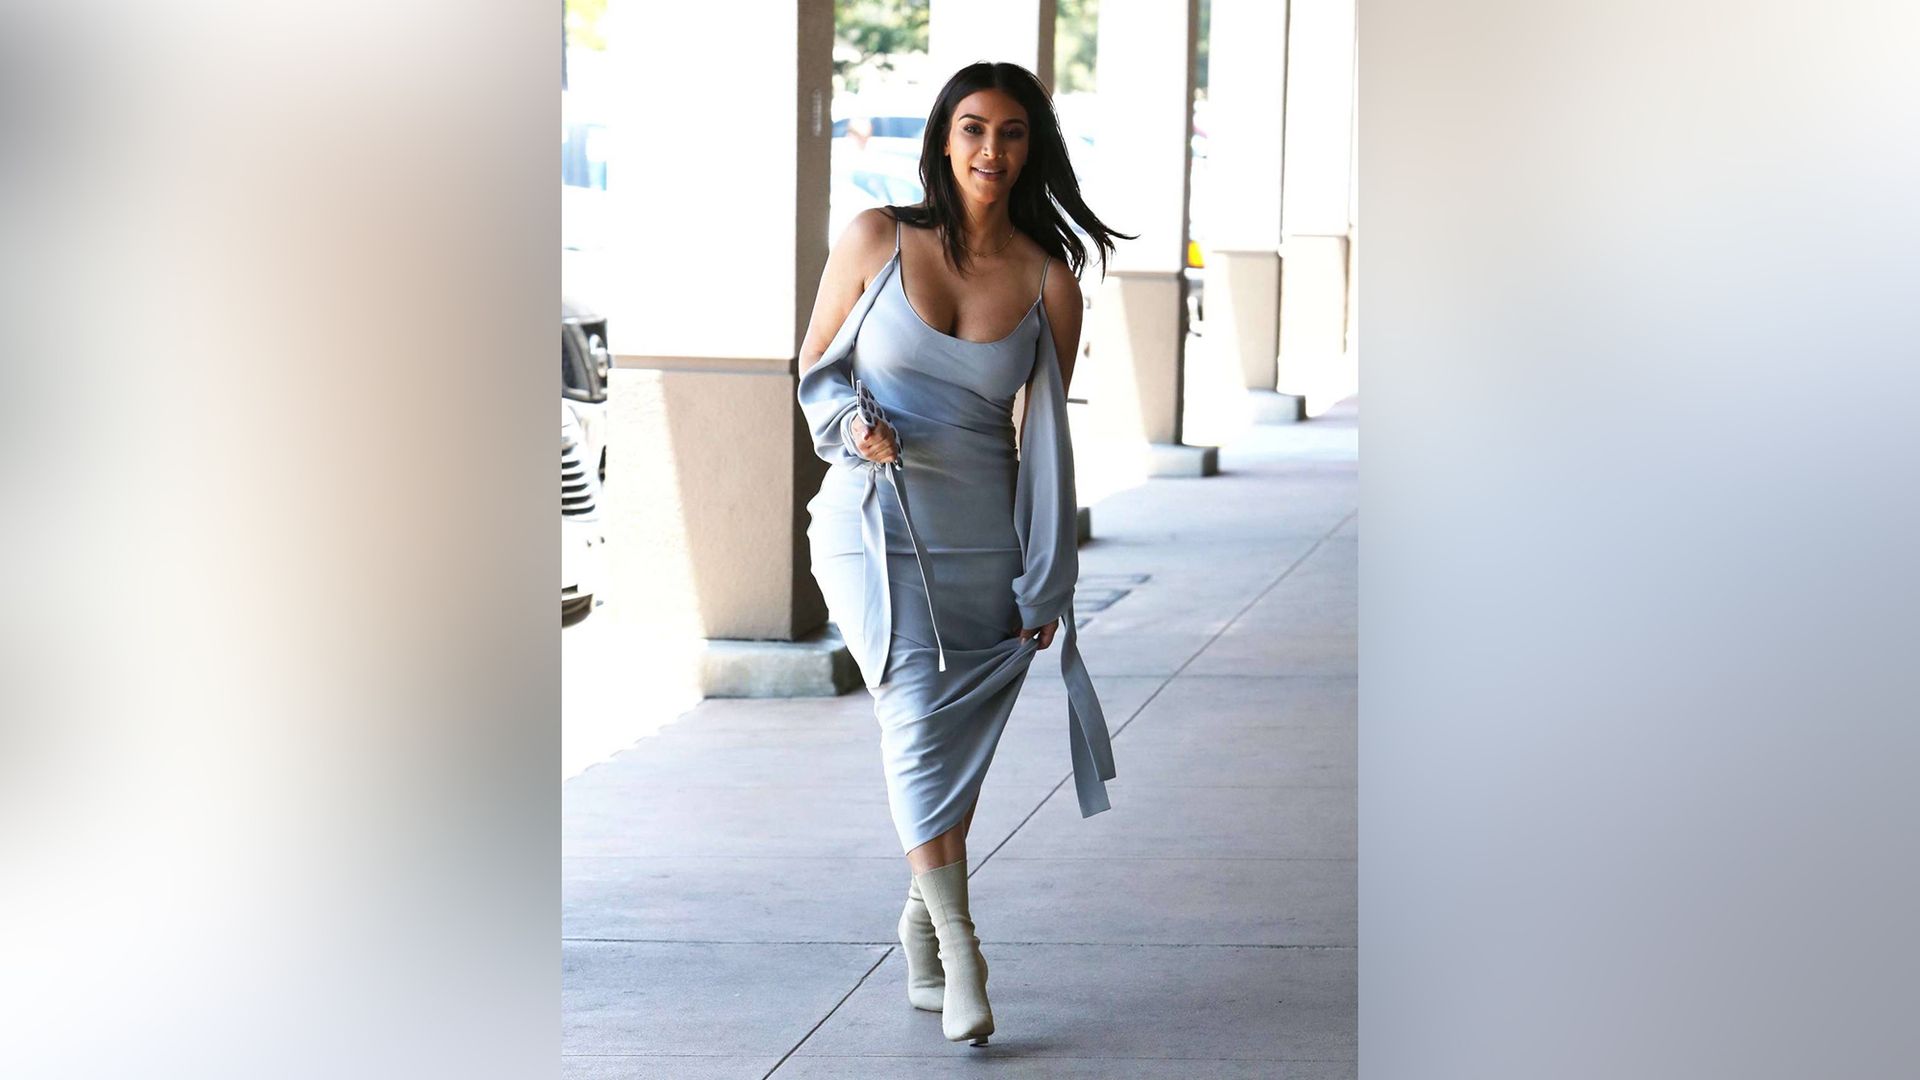 2016: Kim Kardashian lost weight after second birth